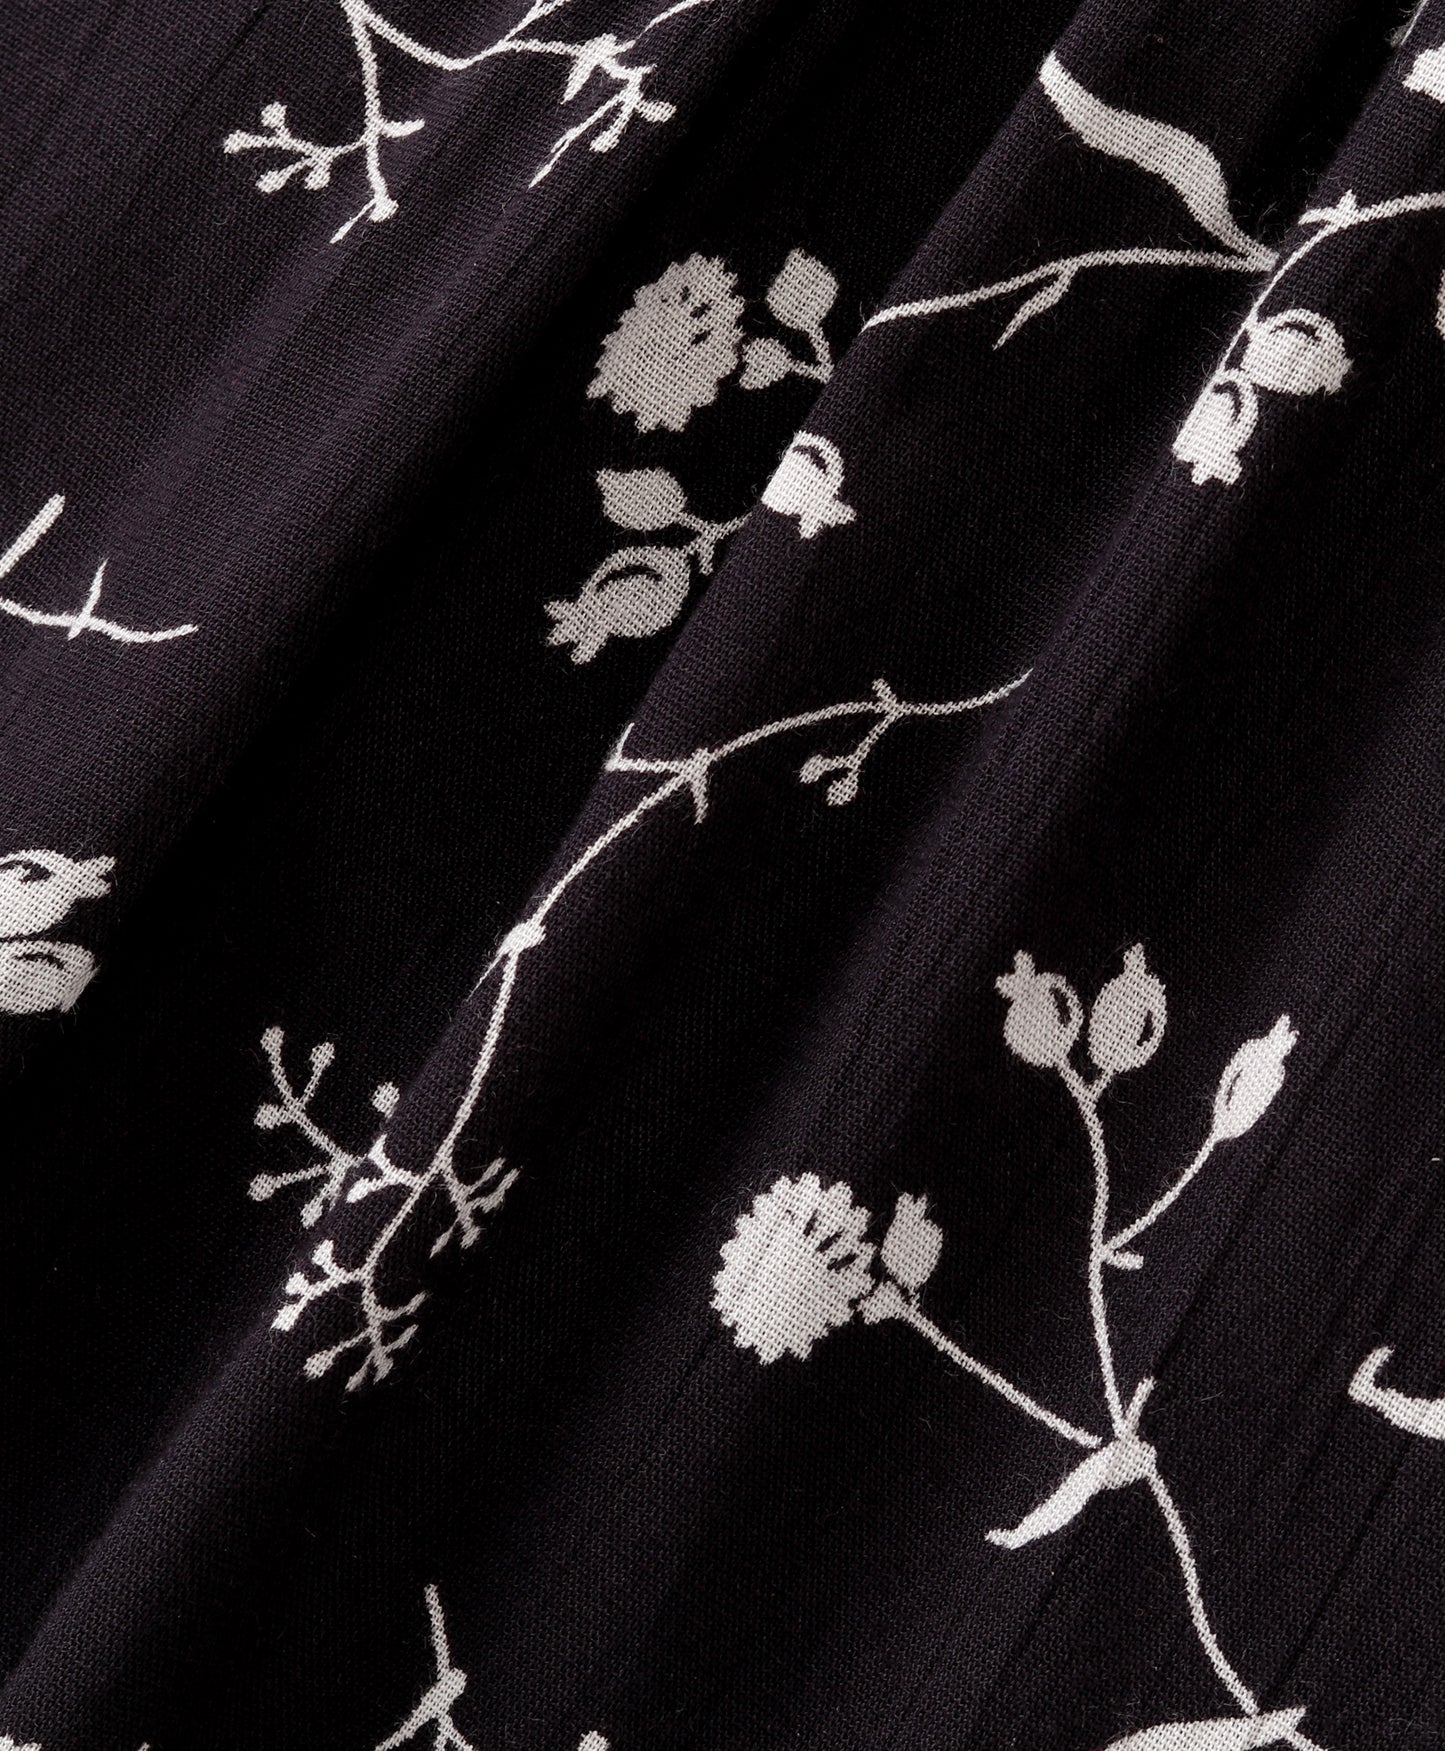 Sleeveless All Over Flower Stem Printed & Lace Embellished Top - Black